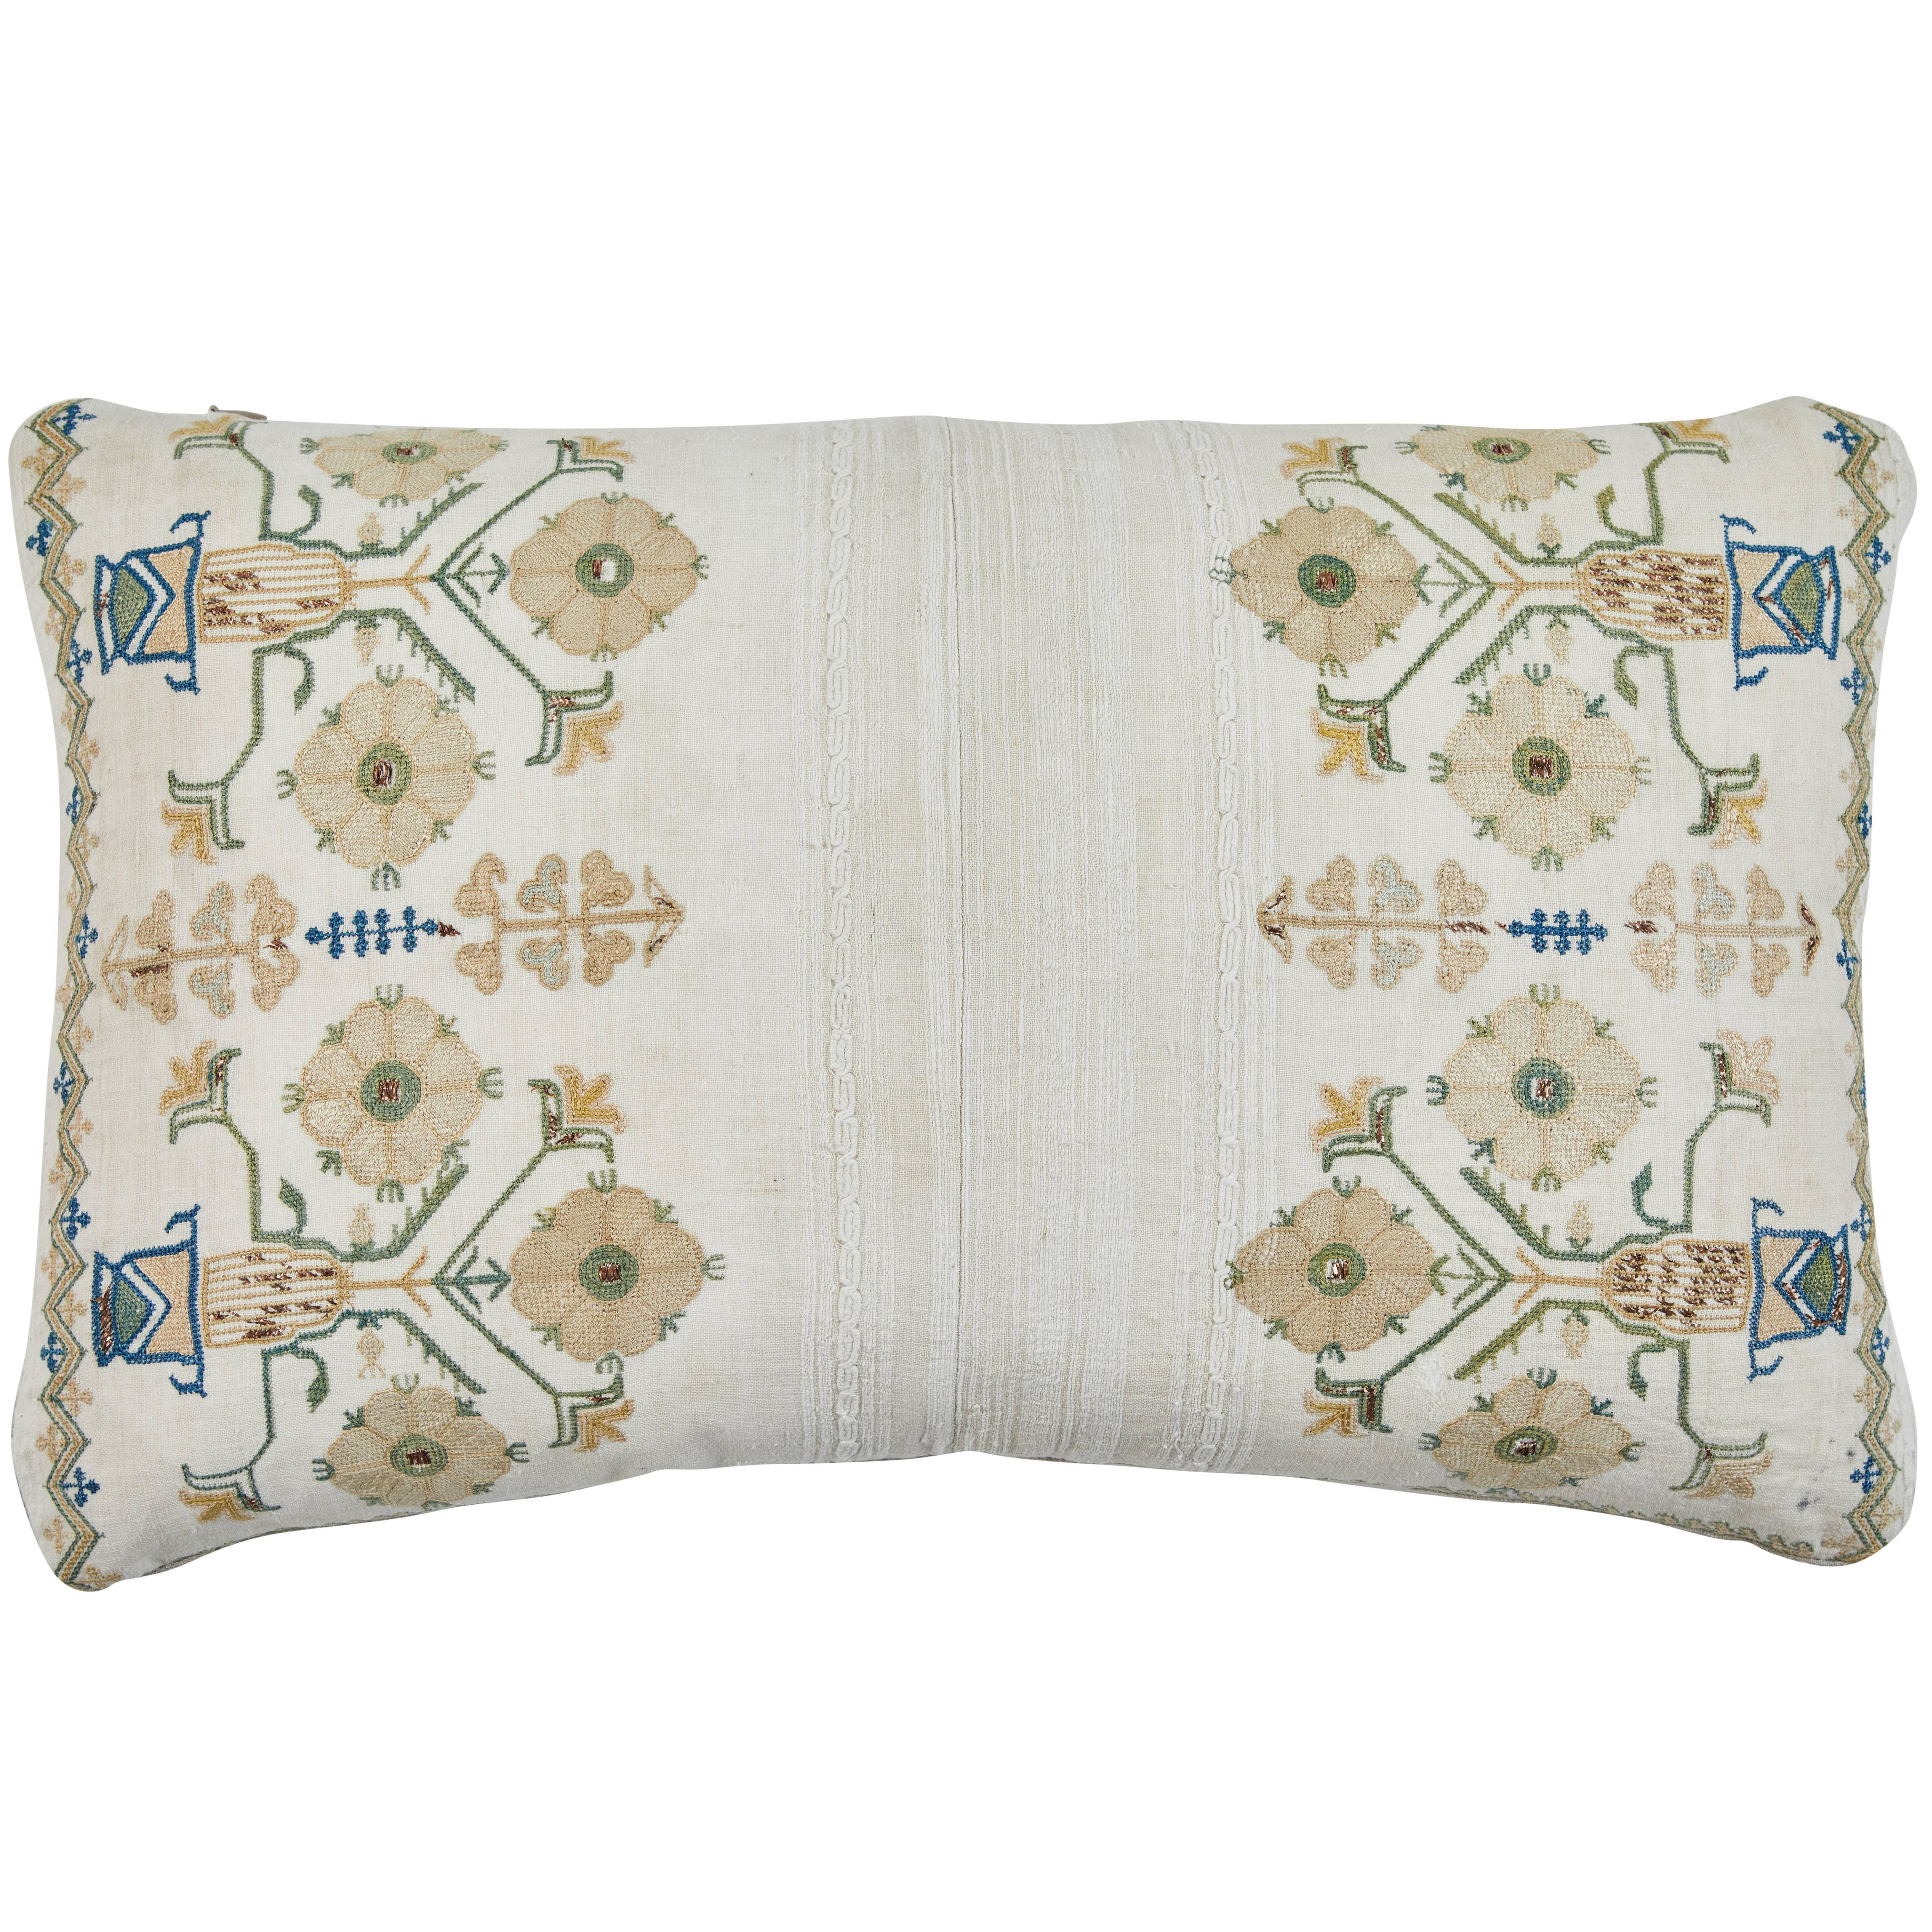 Antique Turkish Ottoman Pillow For Sale